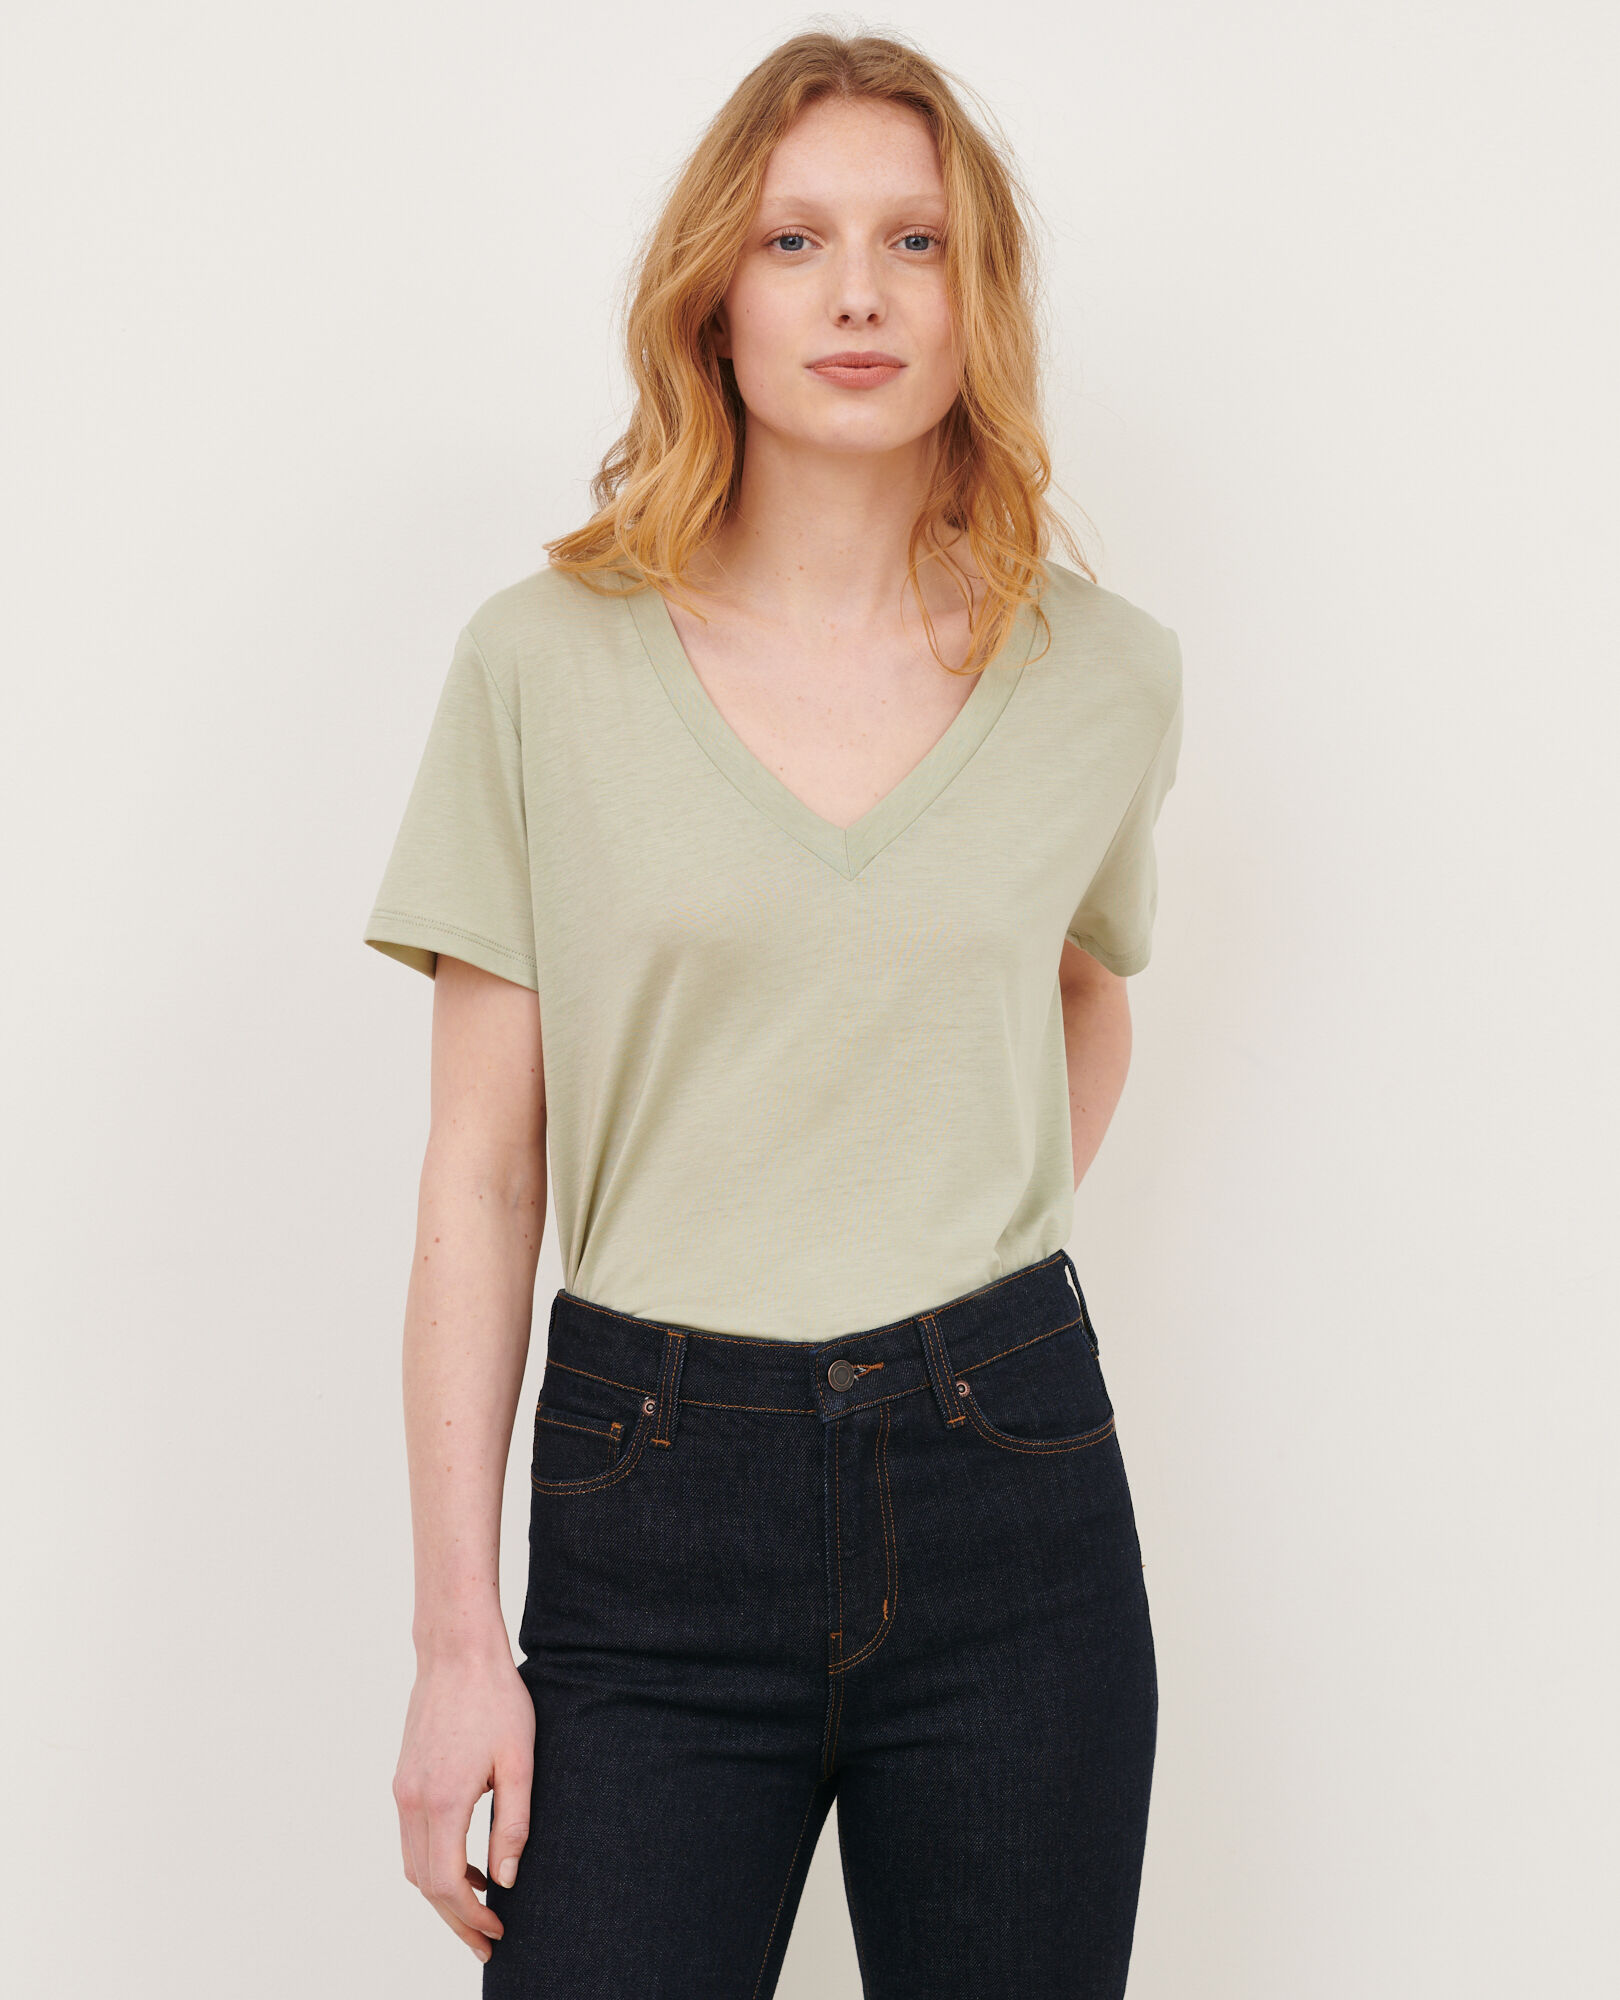 LÉA - Camiseta fluida con cuello de pico 53 green Paberne